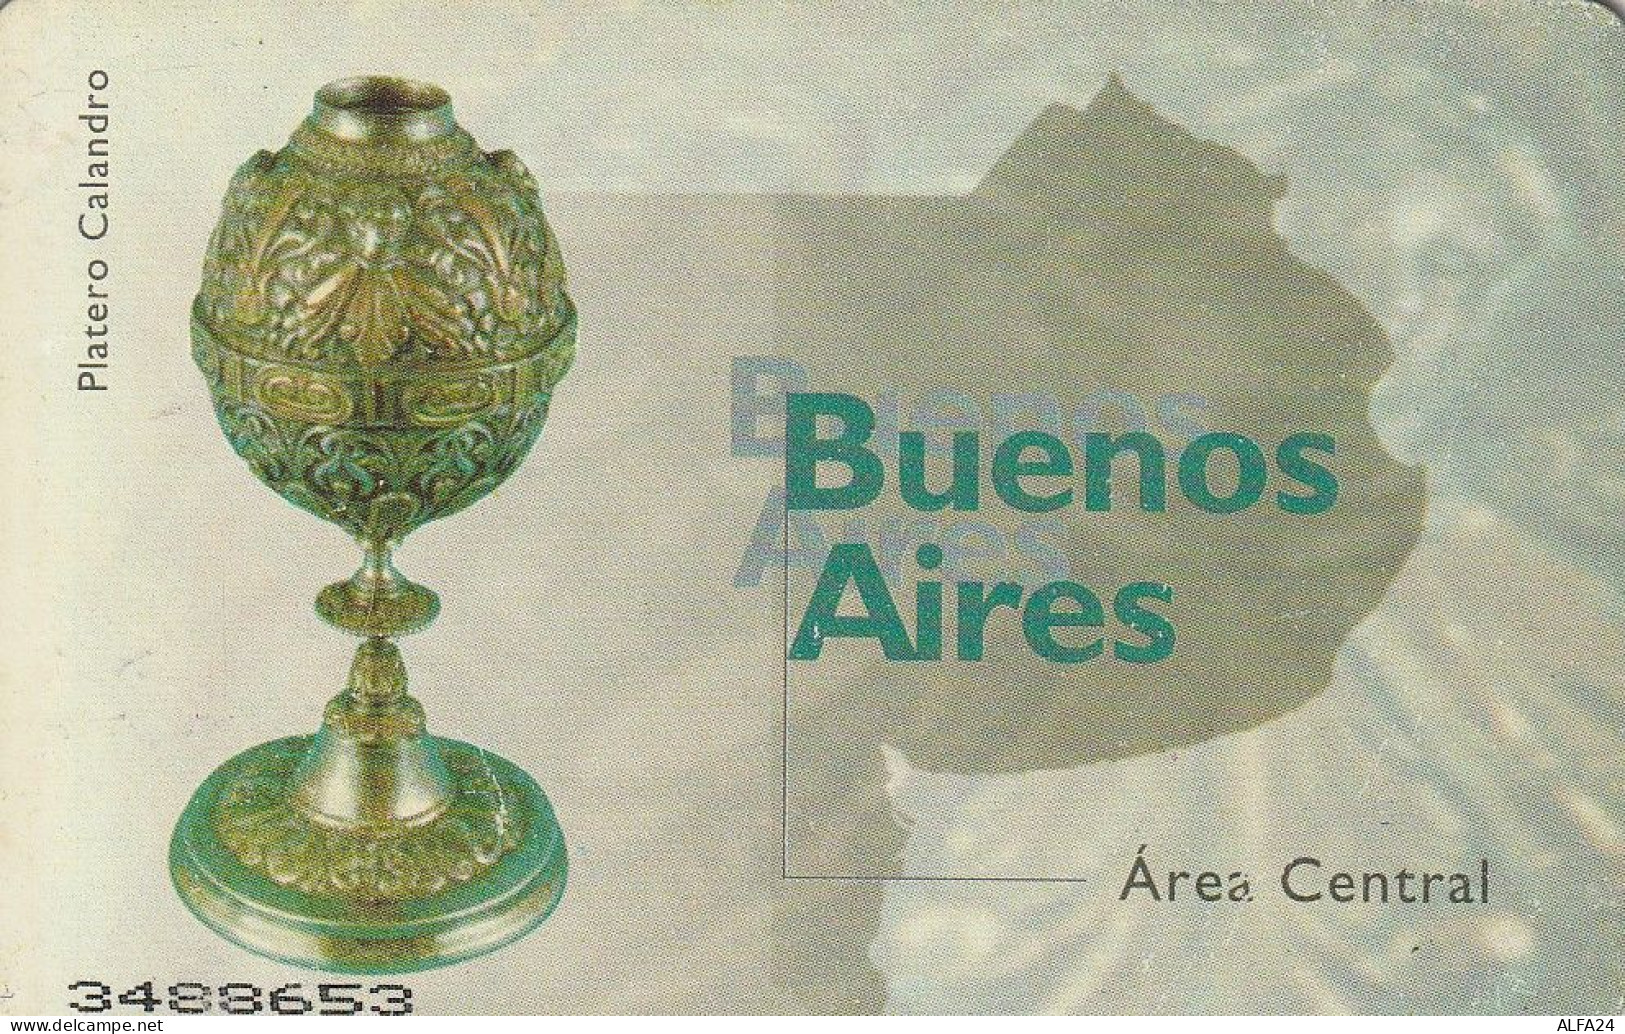 PHONE CARD ARGENTINA  (CV6779 - Argentina